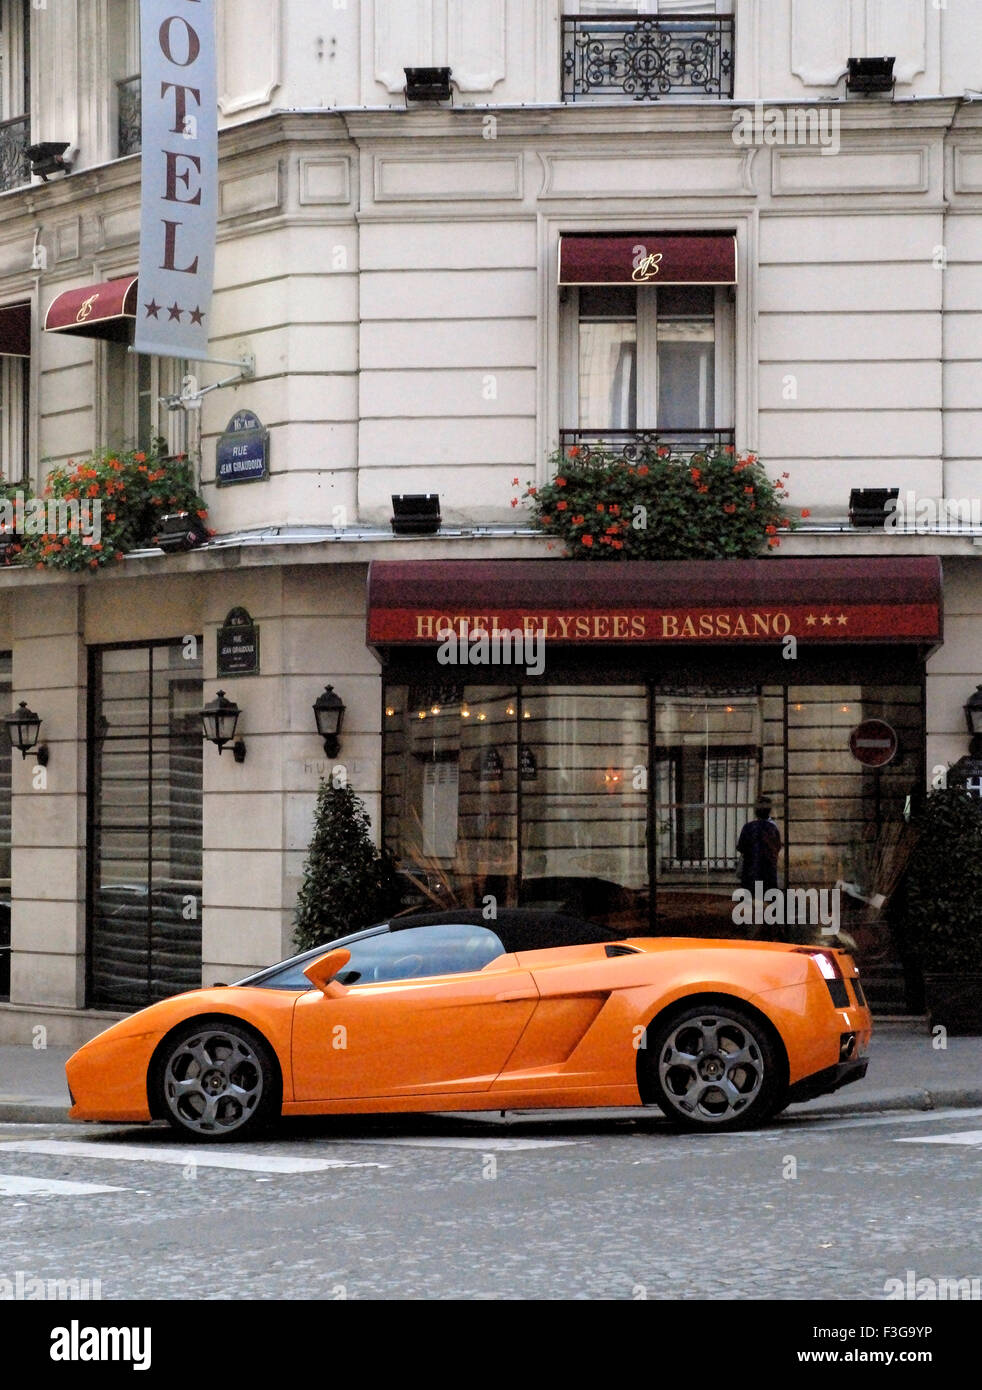 Lamborghini car parked outside Louis Vuitton shop in Stoleshnikov